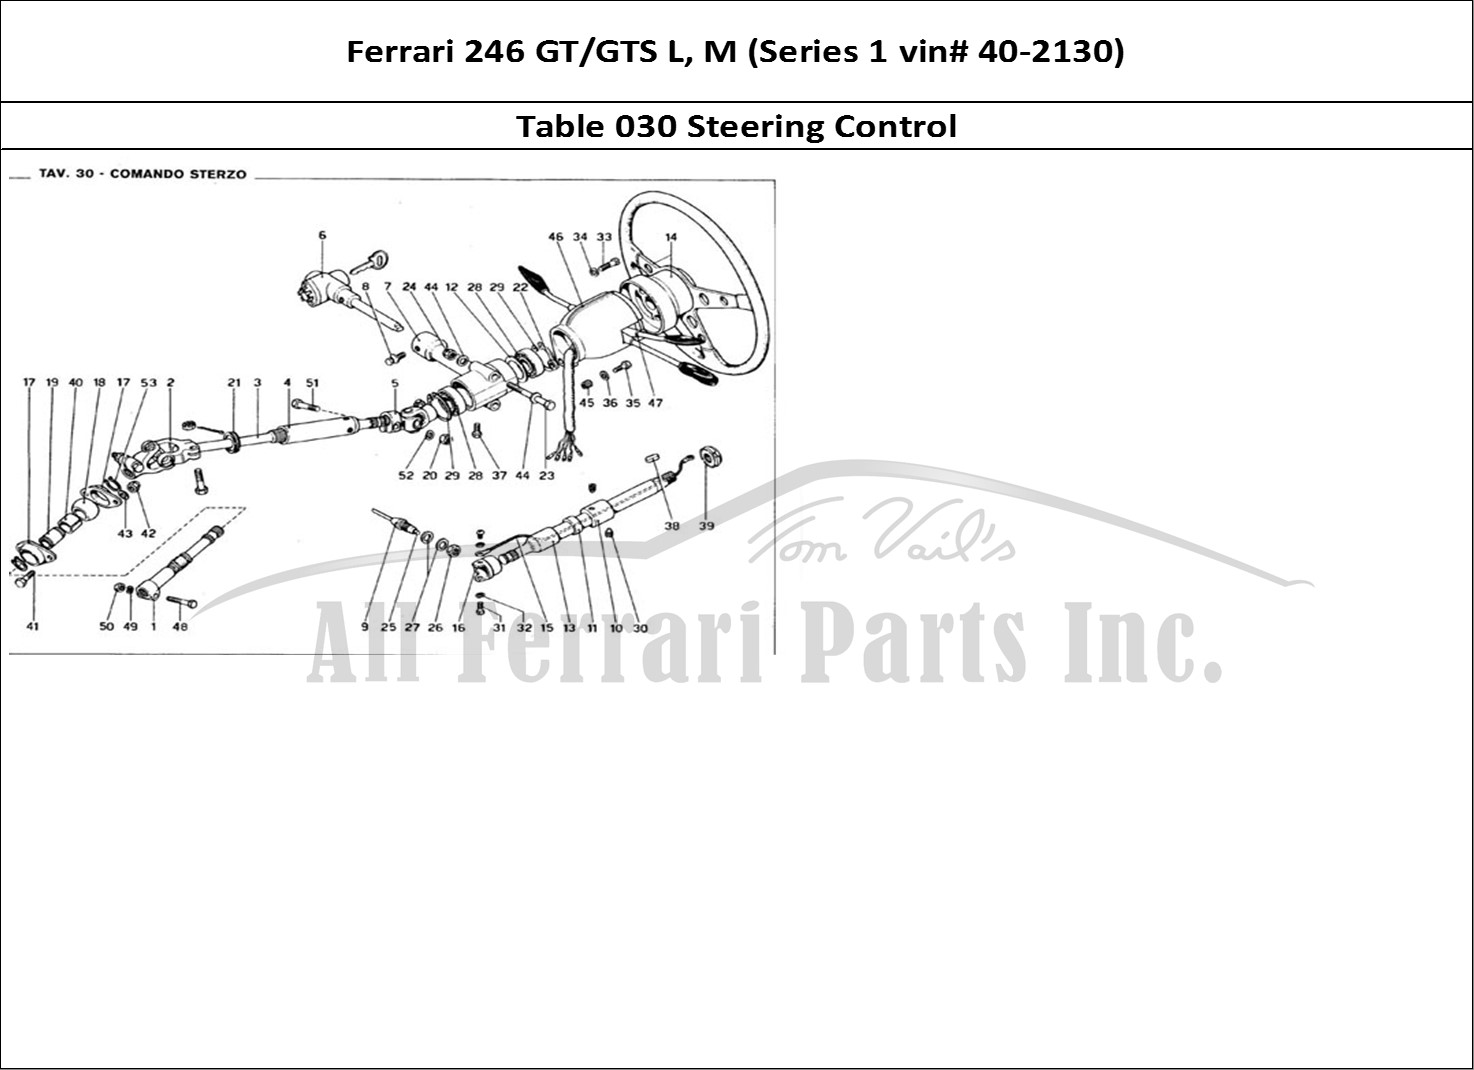 Ferrari Parts Ferrari 246 GT Series 1 Page 030 Steering Control